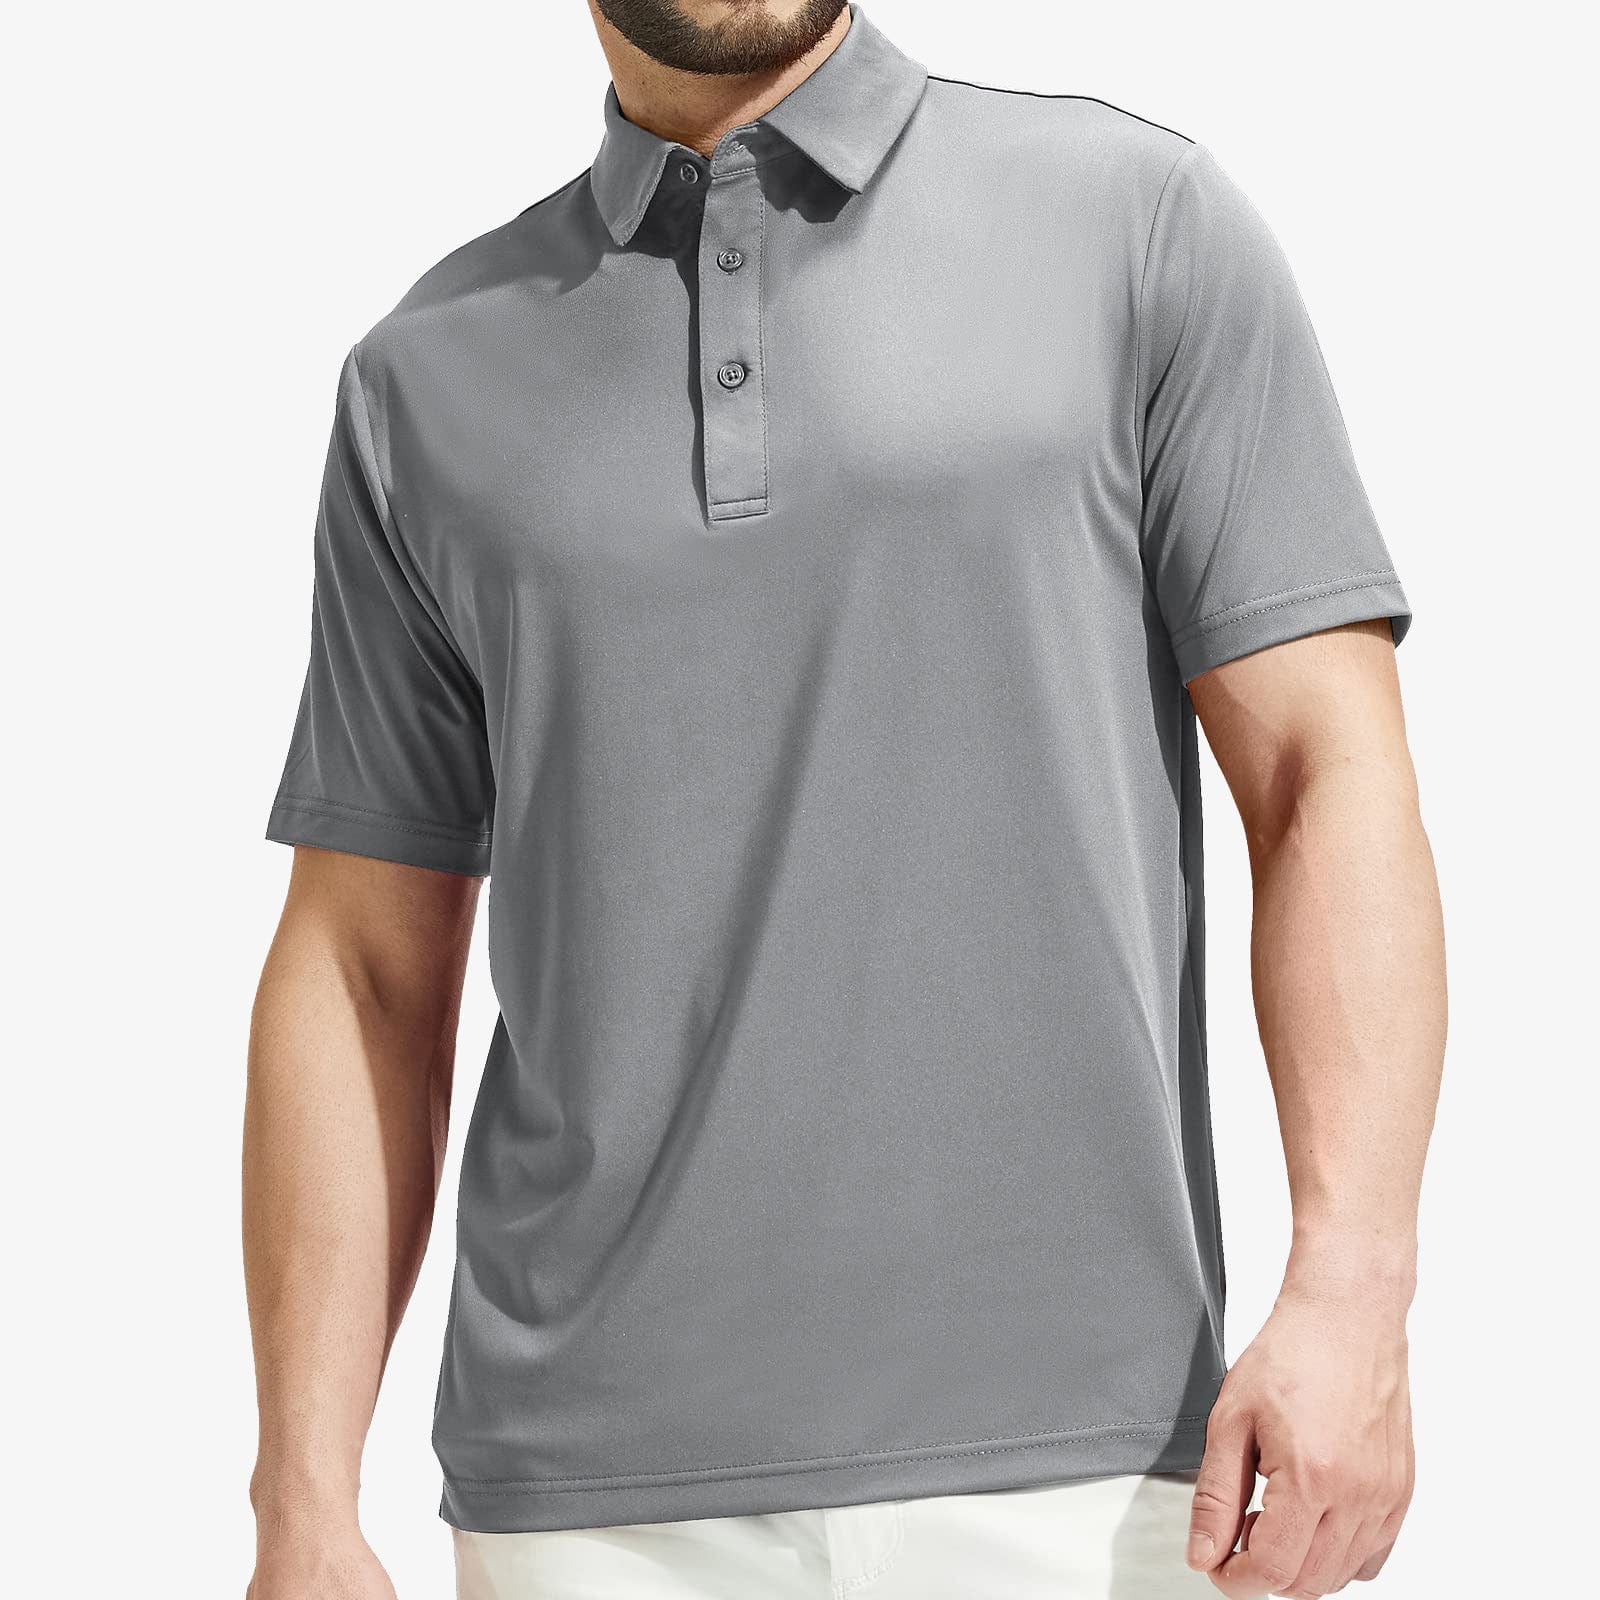 Men's Golf Polo Shirt Quick Dry Sun Protection Polo Shirts - Light Grey / S